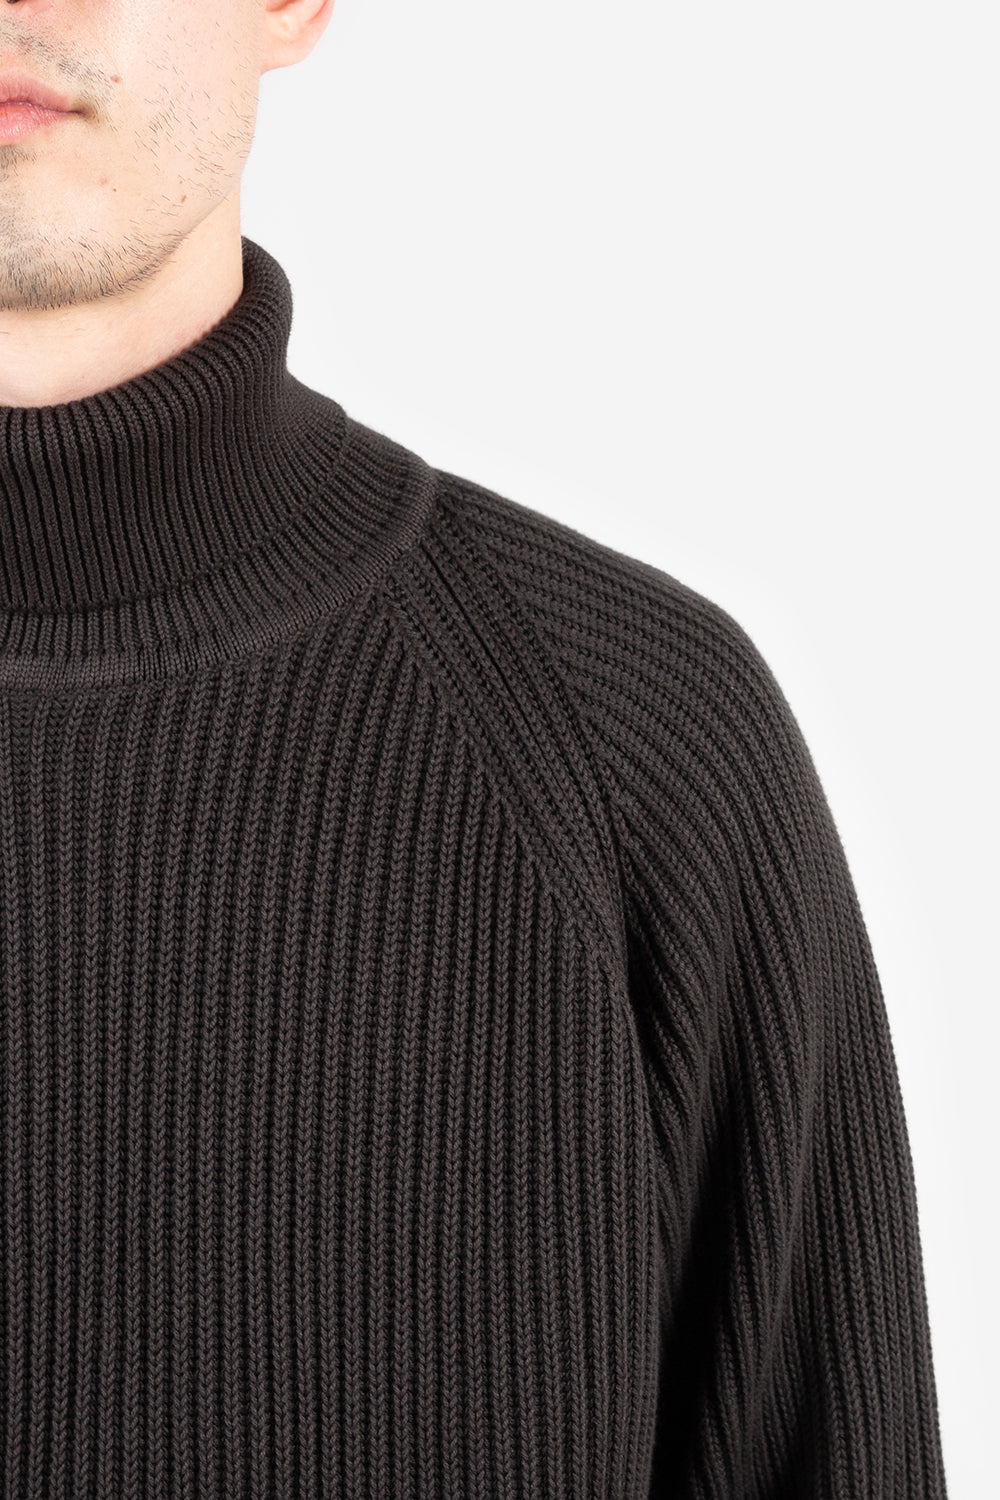 knickerbocker heavy Rib Turtleneck Sweater Black